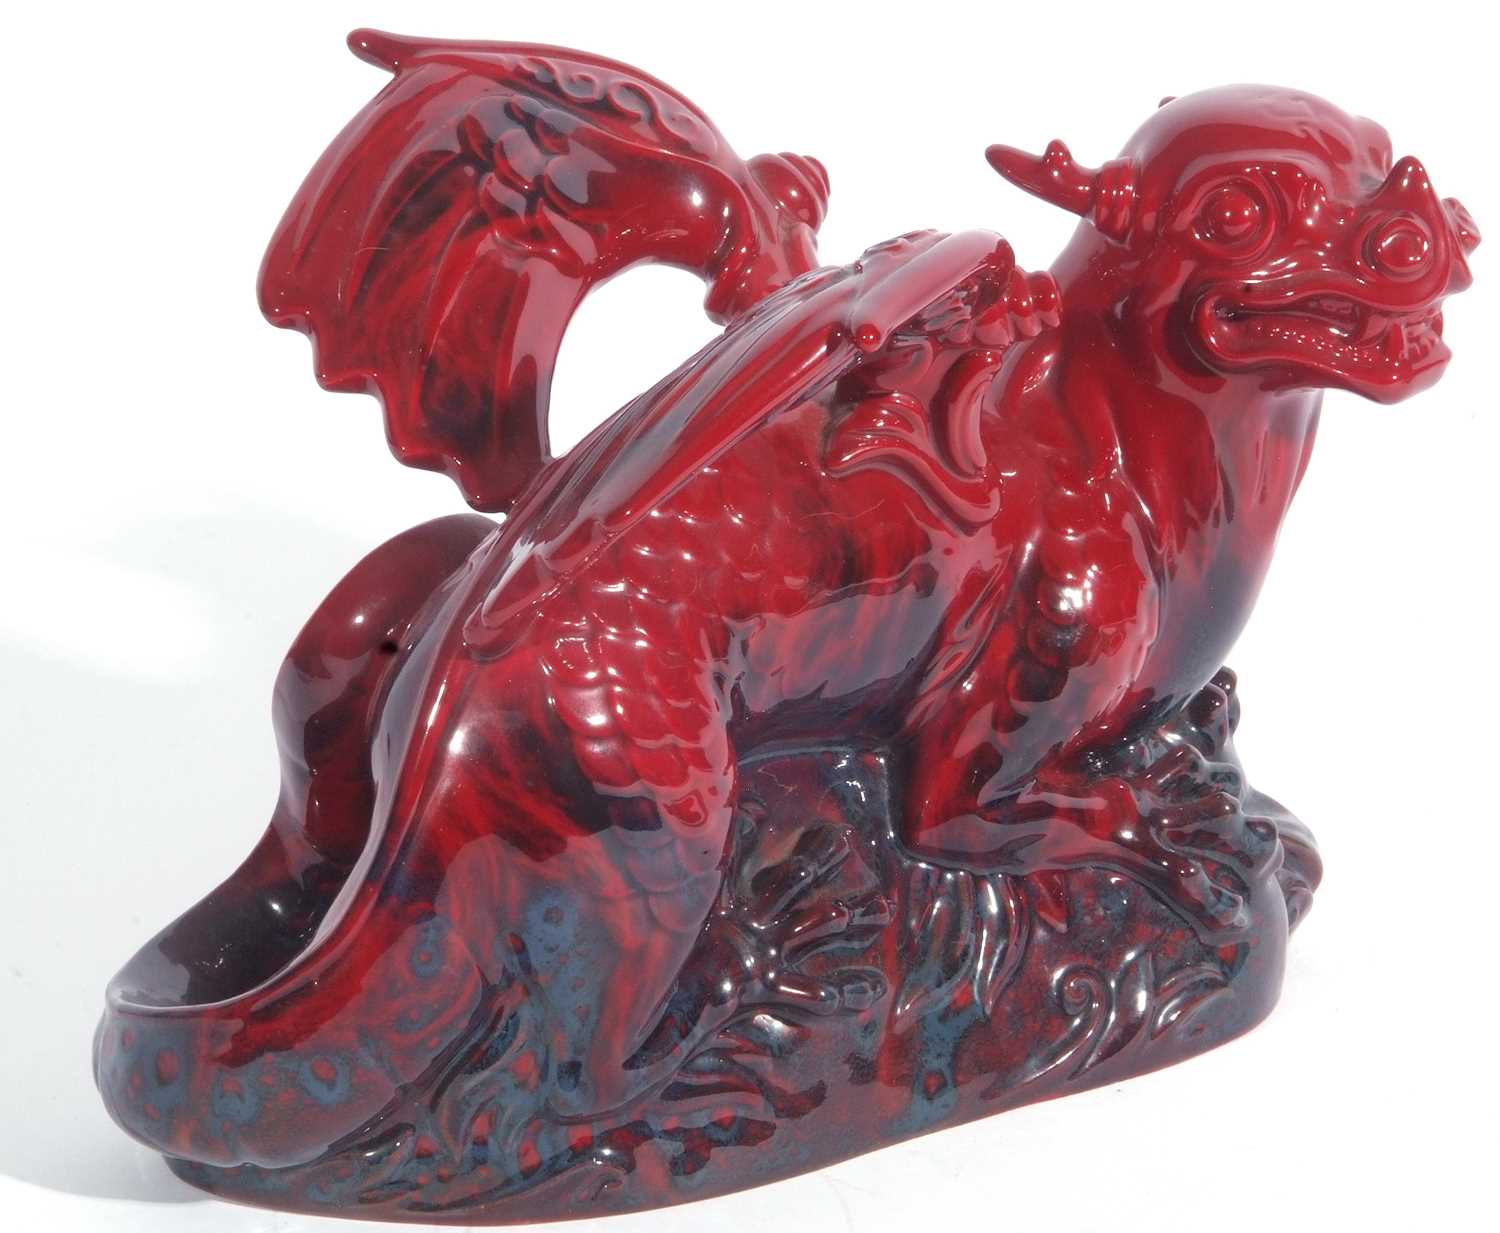 Flambe figure of a dragon on rock work - Image 4 of 10